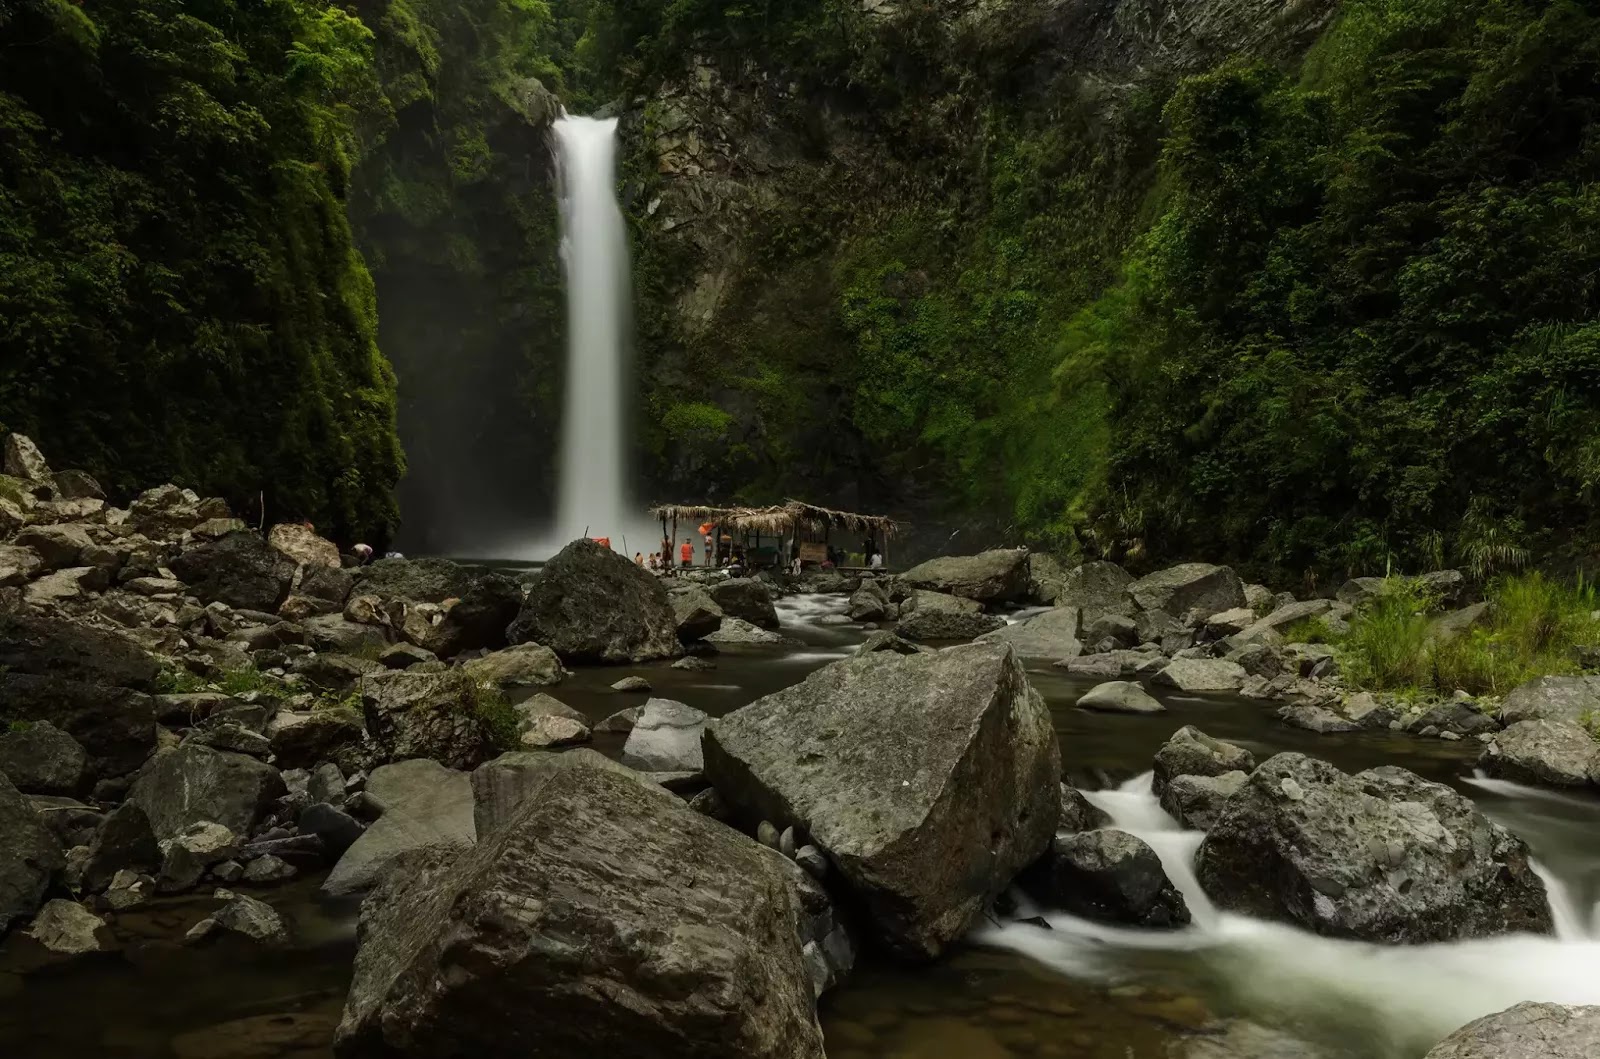 Tapiy-ya Falls at the back of Batad Rice Terraces Ifugao Cordillera Administrative Region Philippines 